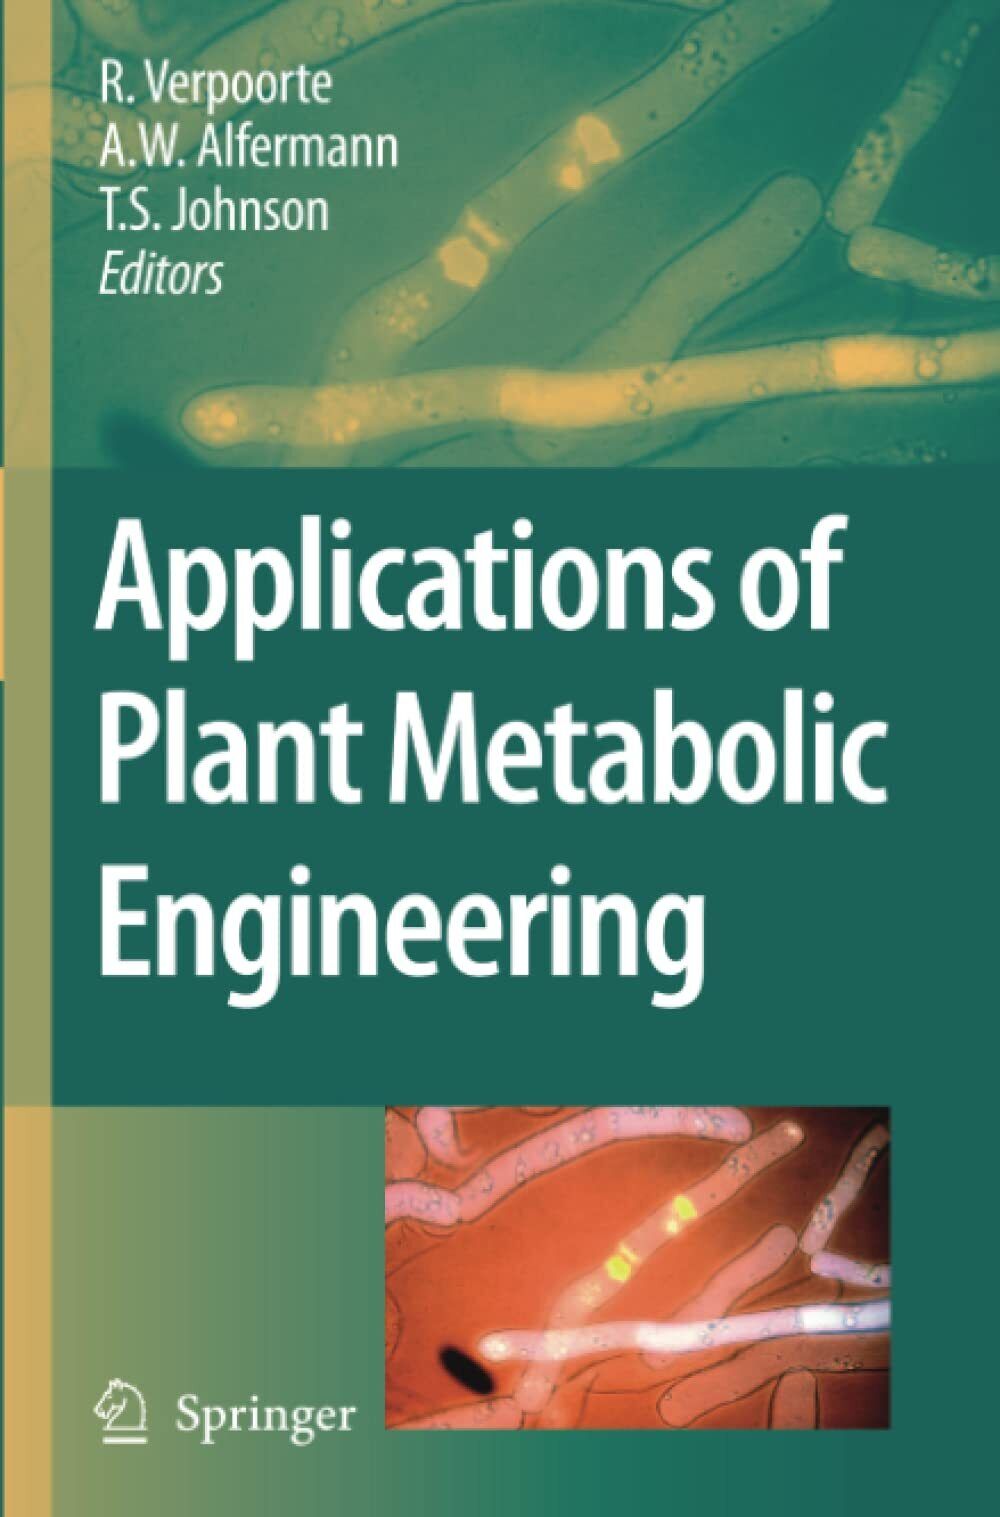 Applications of Plant Metabolic Engineering - R. Verpoorte - Springer, 2010